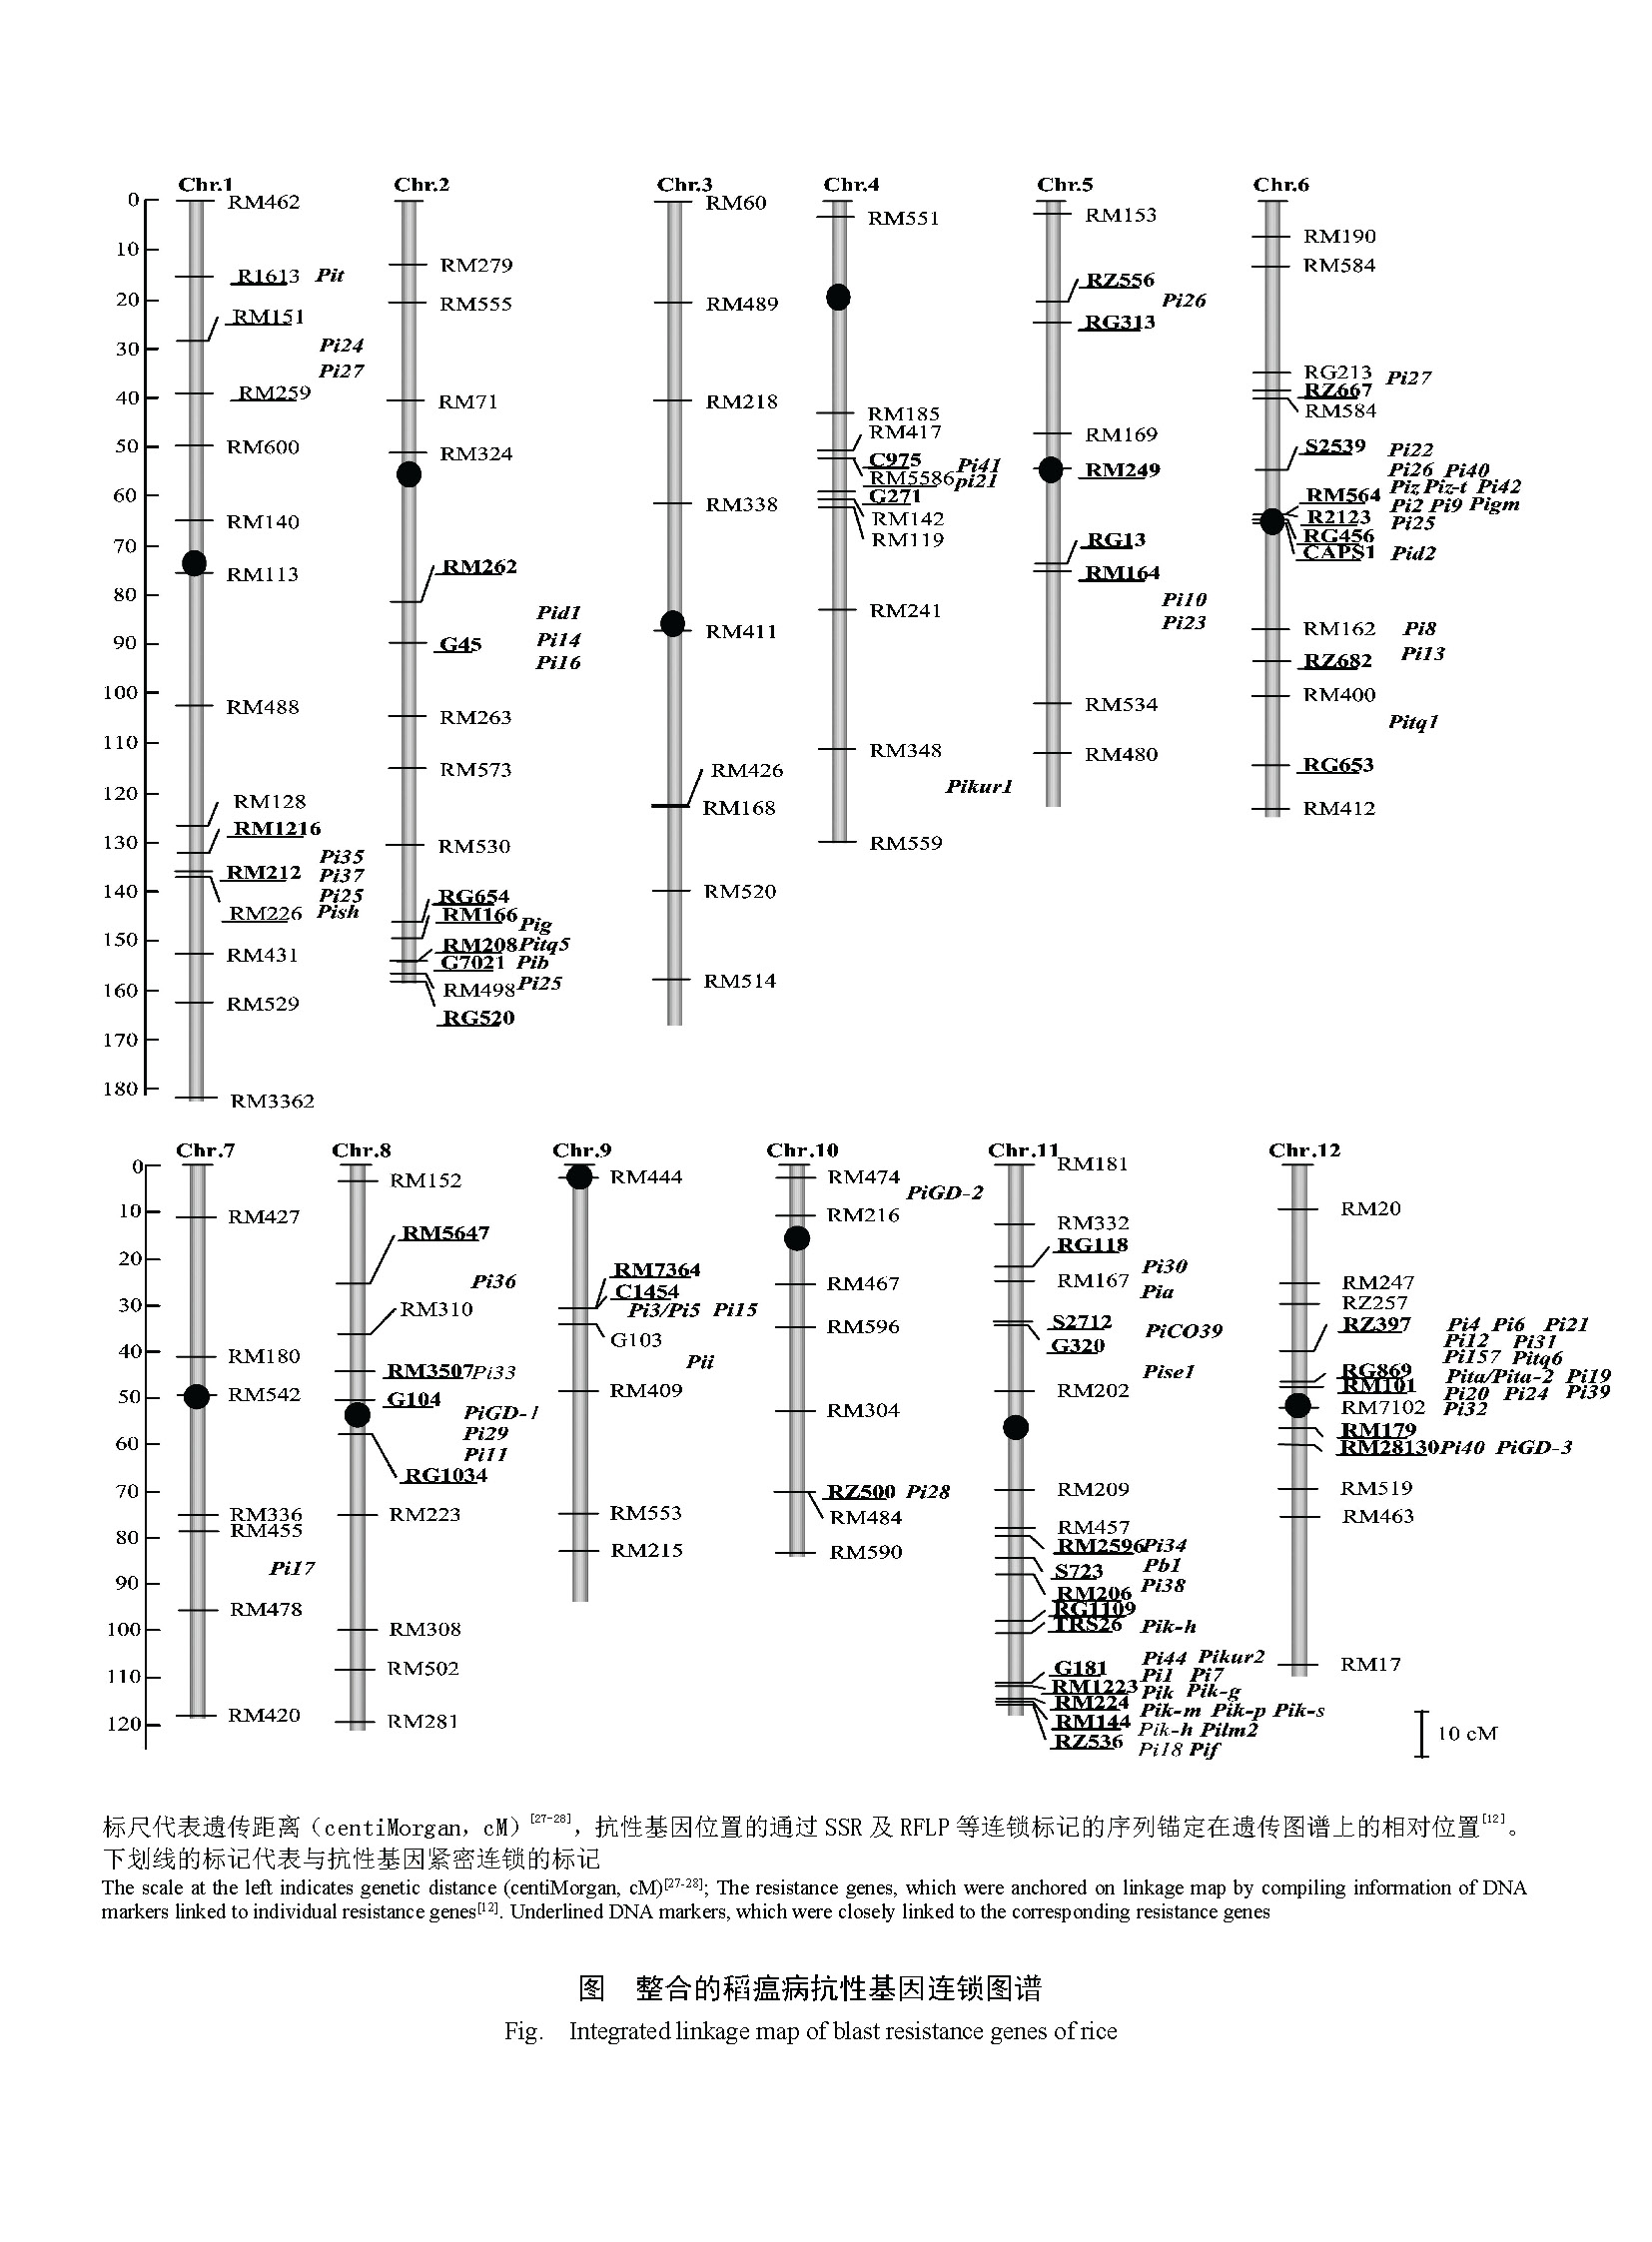 杨勤忠_整合的稻瘟病抗性基因连锁图谱 Integrated linkage map of blast resistance genes of rice